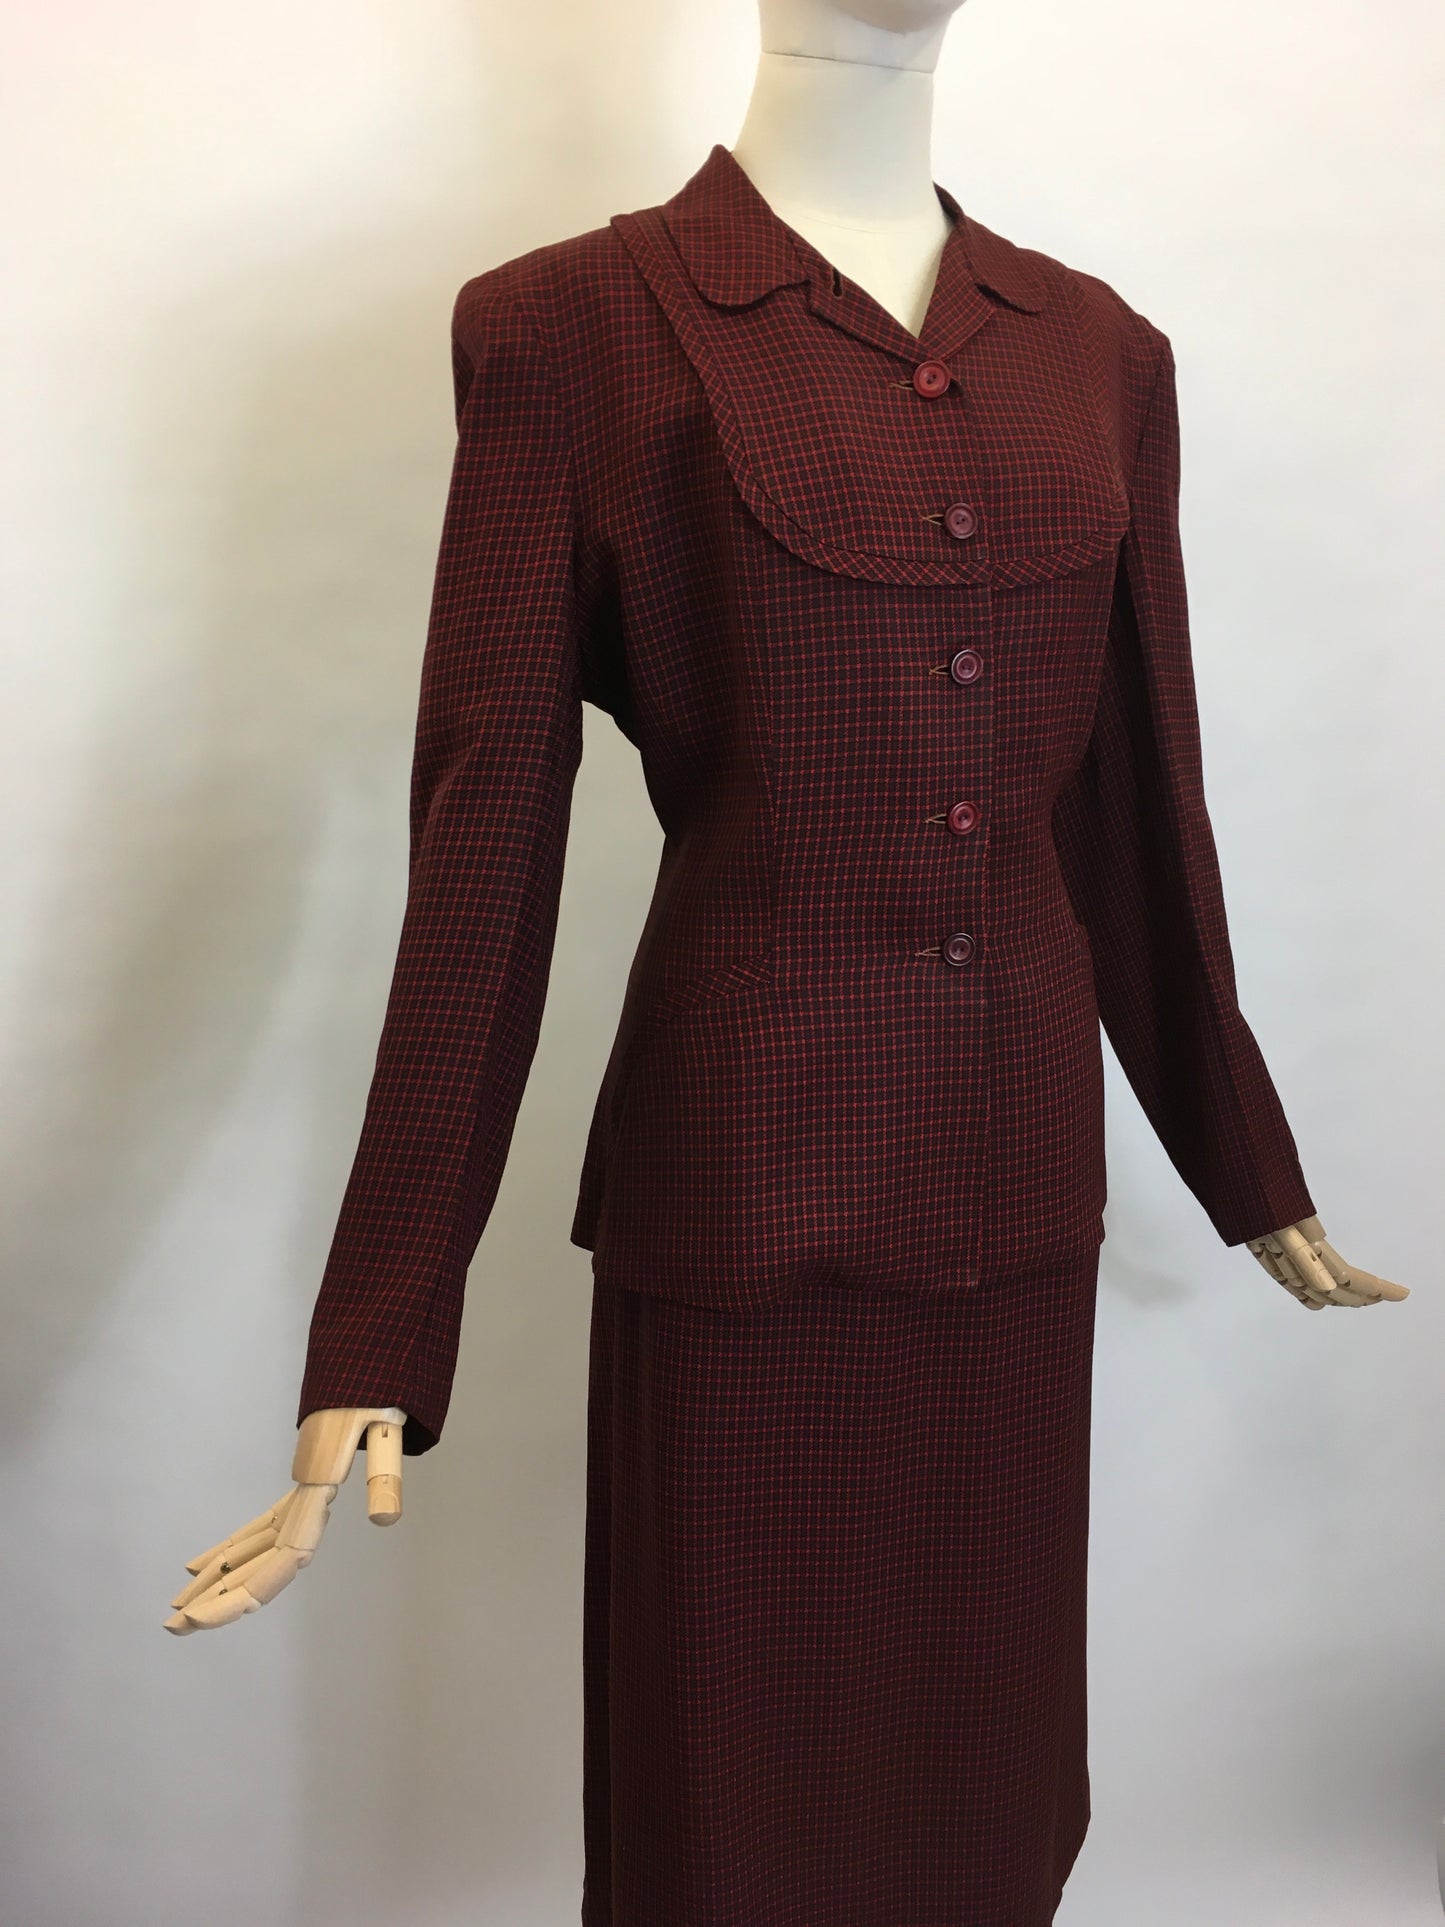 Original STUNNING 1940's American Suit - Fabulous Red & Black Check Pattern Fabric